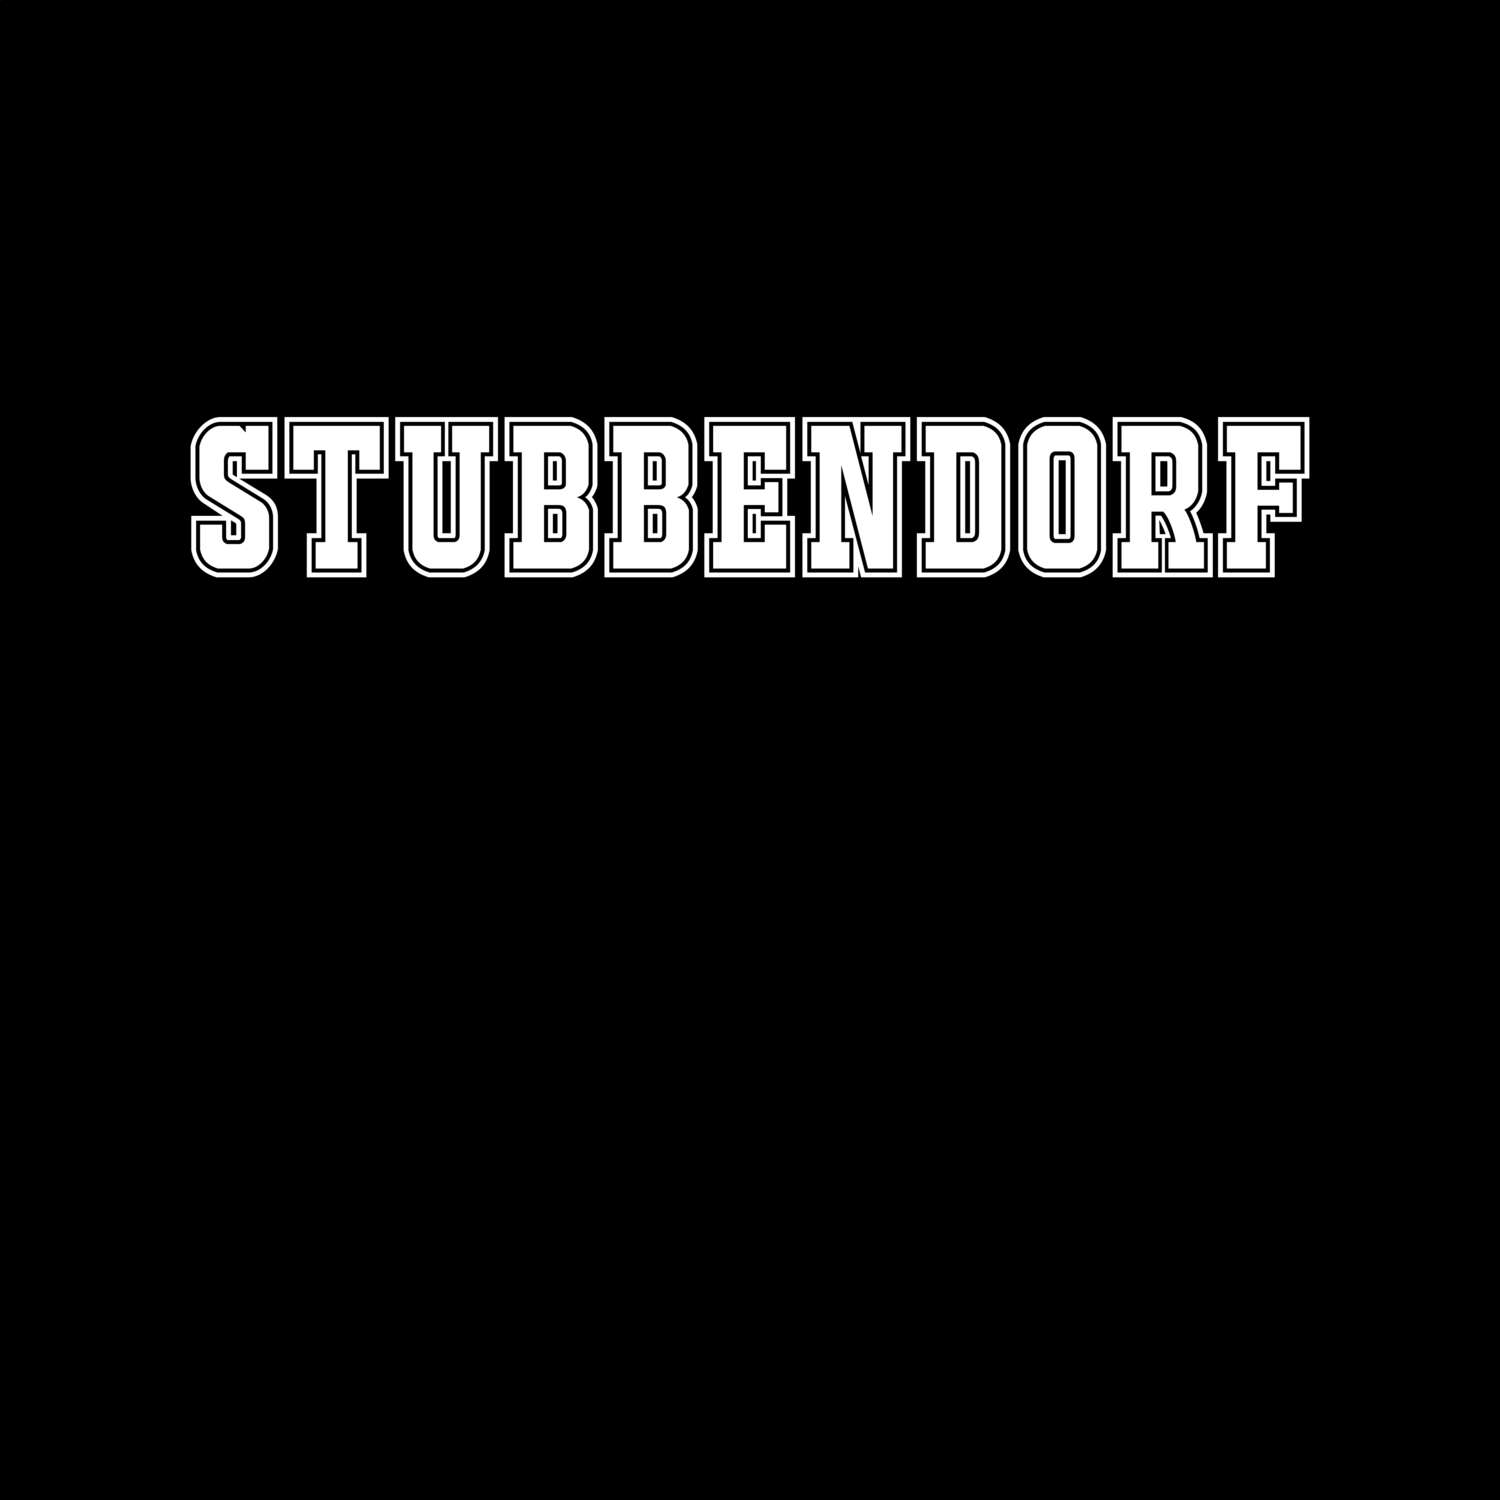 Stubbendorf T-Shirt »Classic«